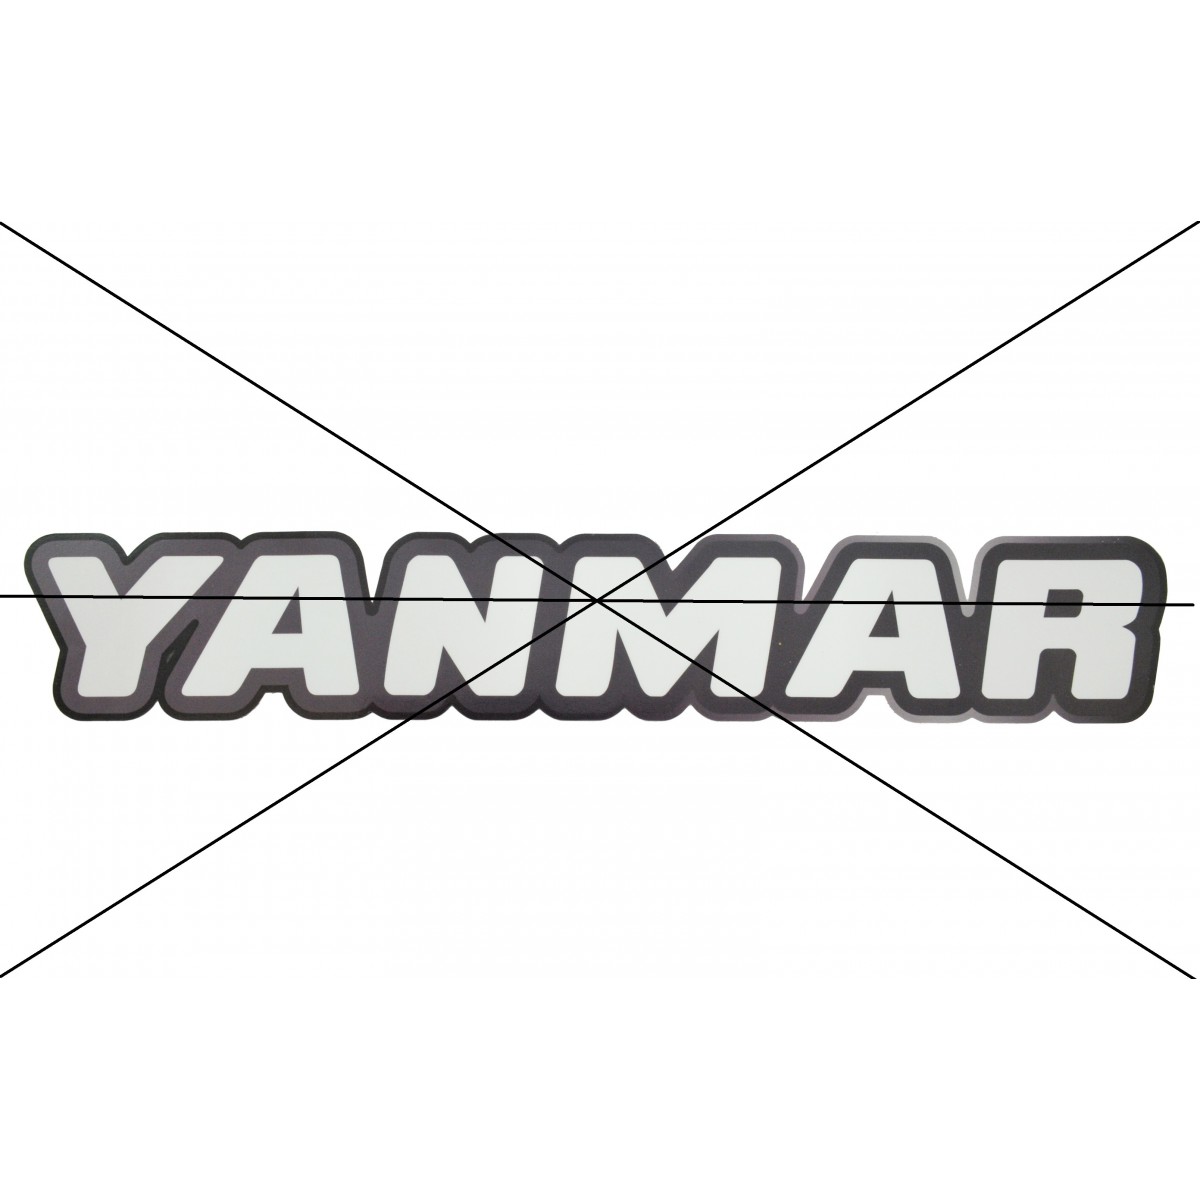 YANMAR sticker 48x285 mm